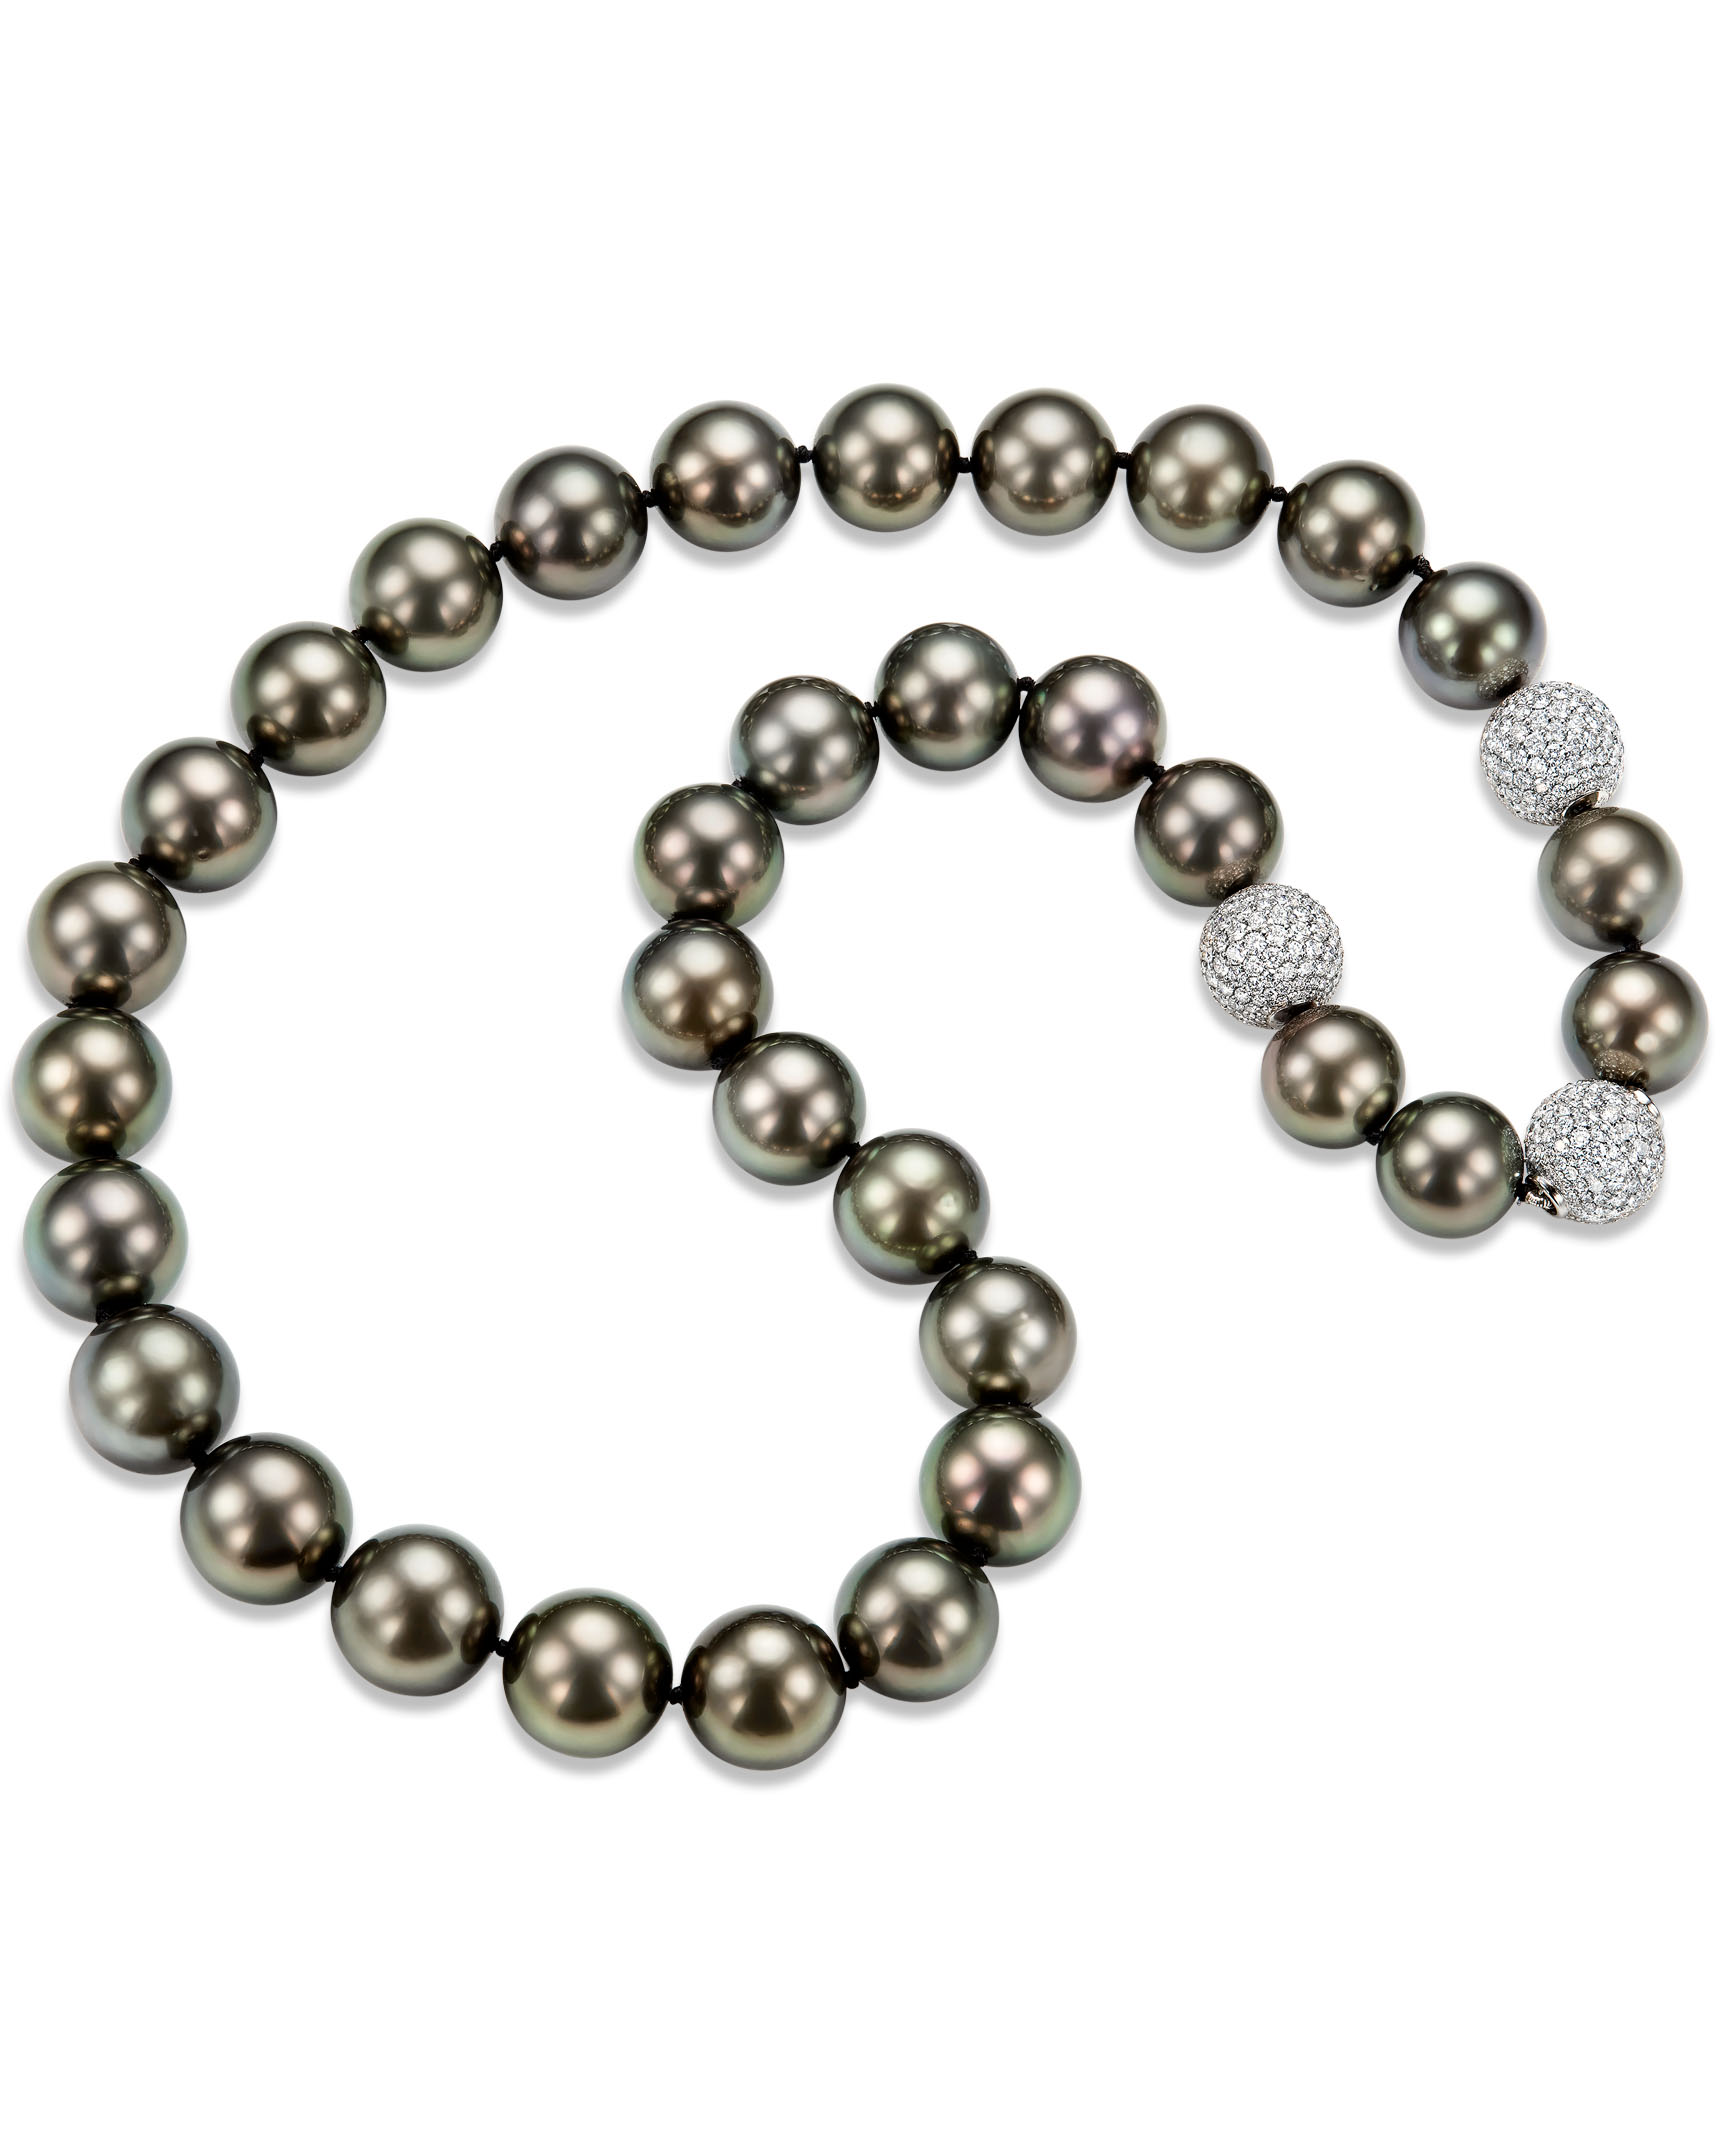 Black Spinel and Handmade Gold Bead Necklace - Turgeon Raine